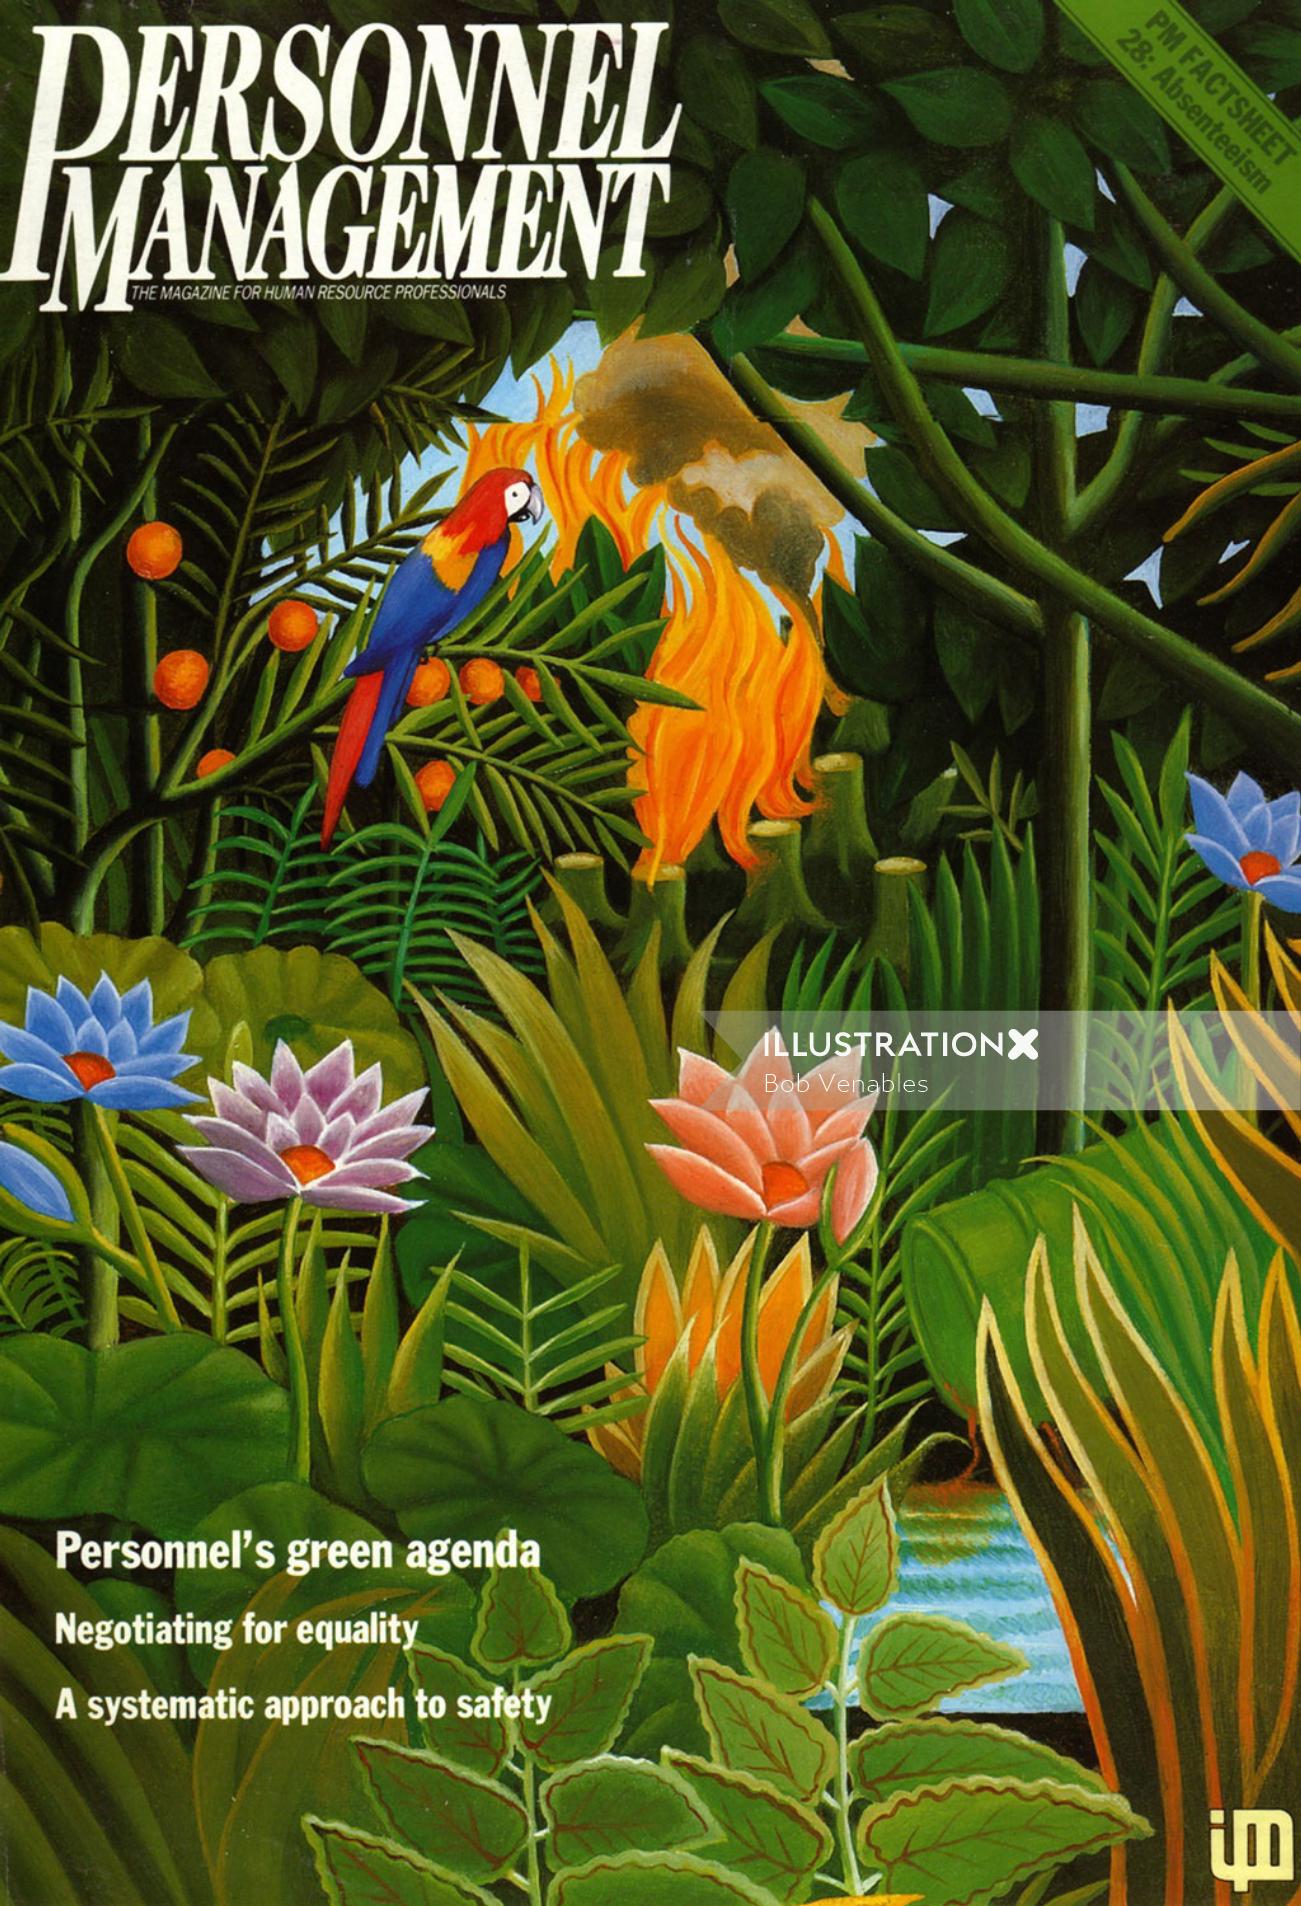 Arte da capa da Personnel Management Magazine sobre Rainforest